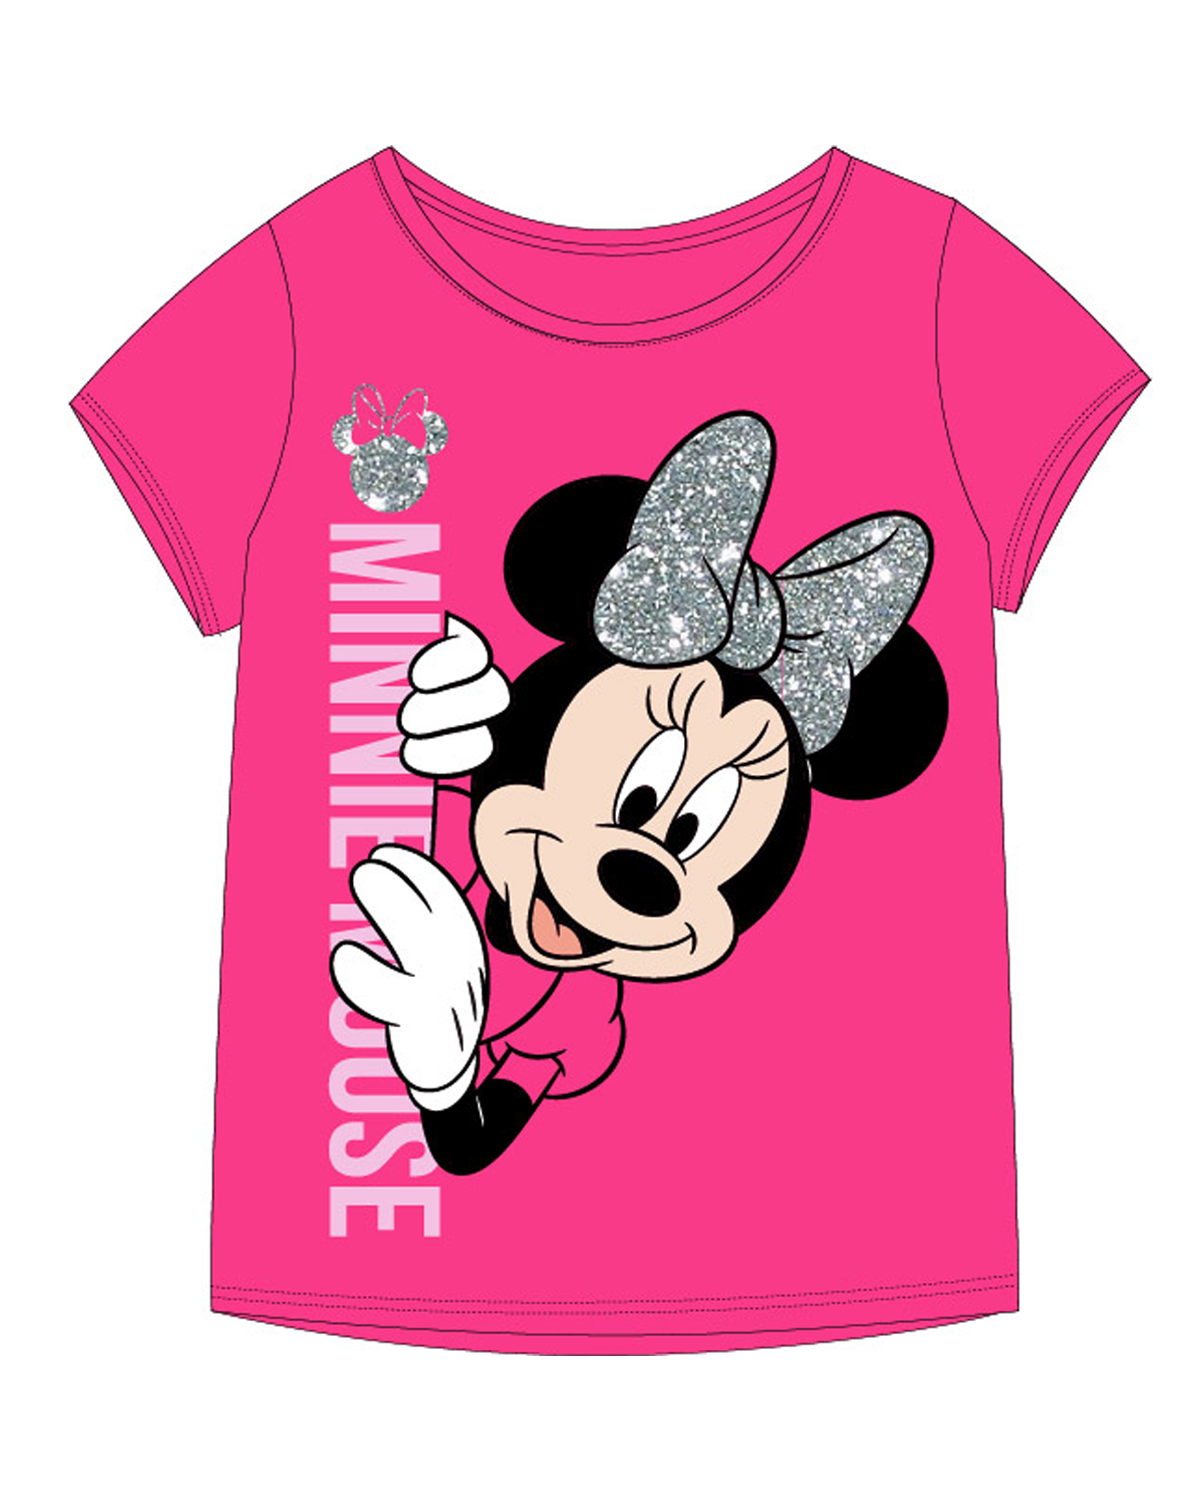 Minnie Mouse - licence Dívčí tričko - Minnie Mouse 52029490KOM, růžová Barva: Růžová, Velikost: 128